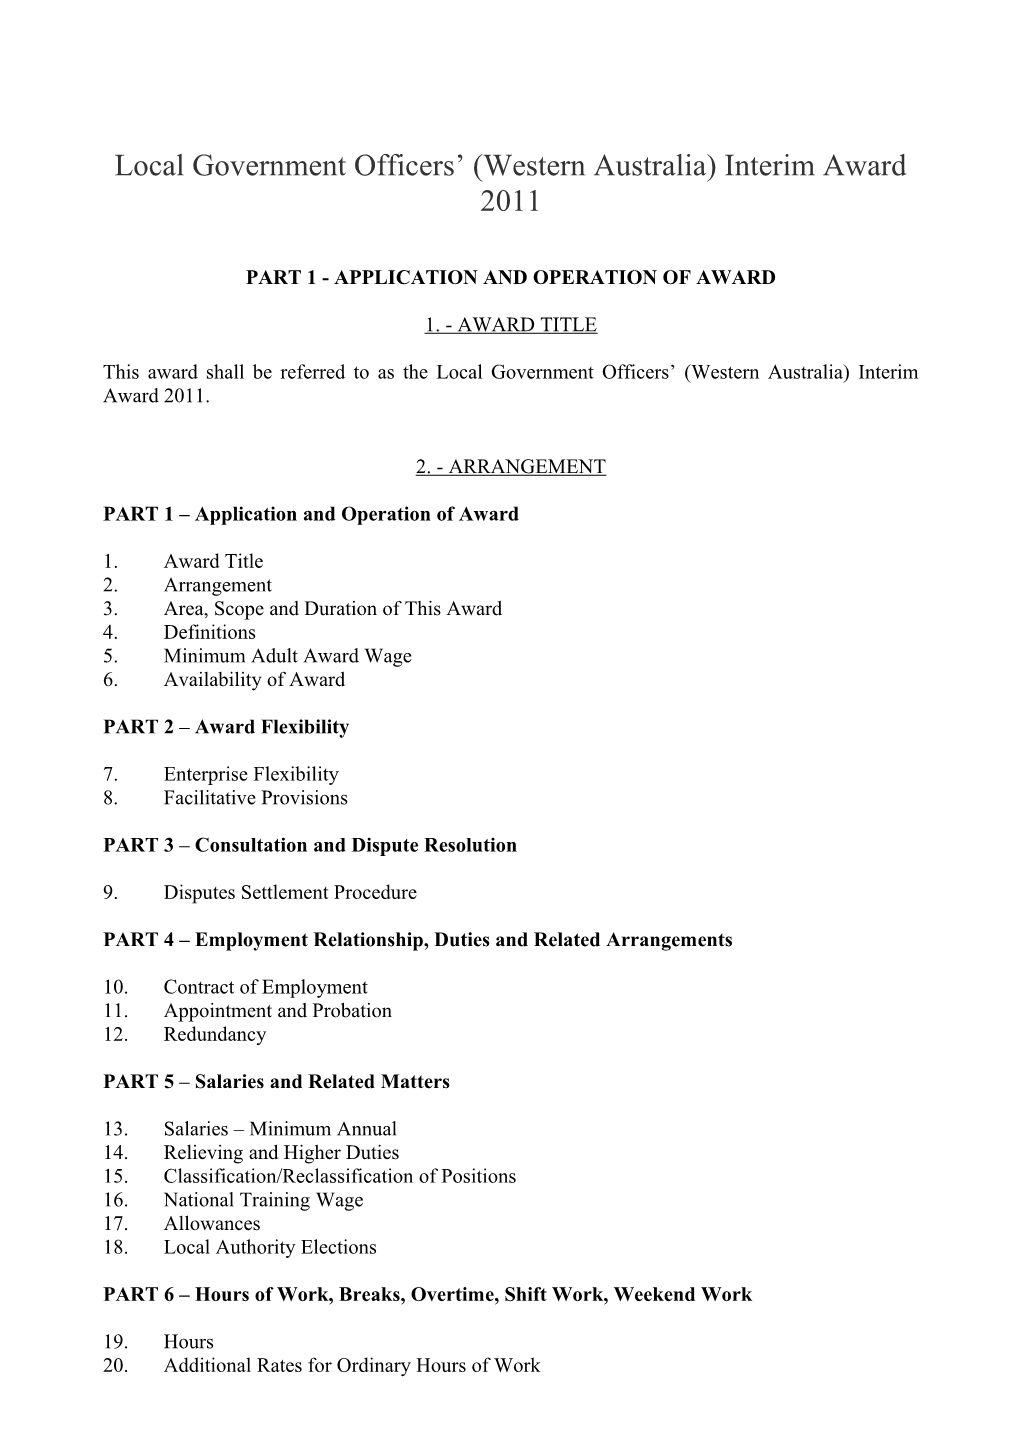 Local Government Officers (Western Australia) Interim Award 2011